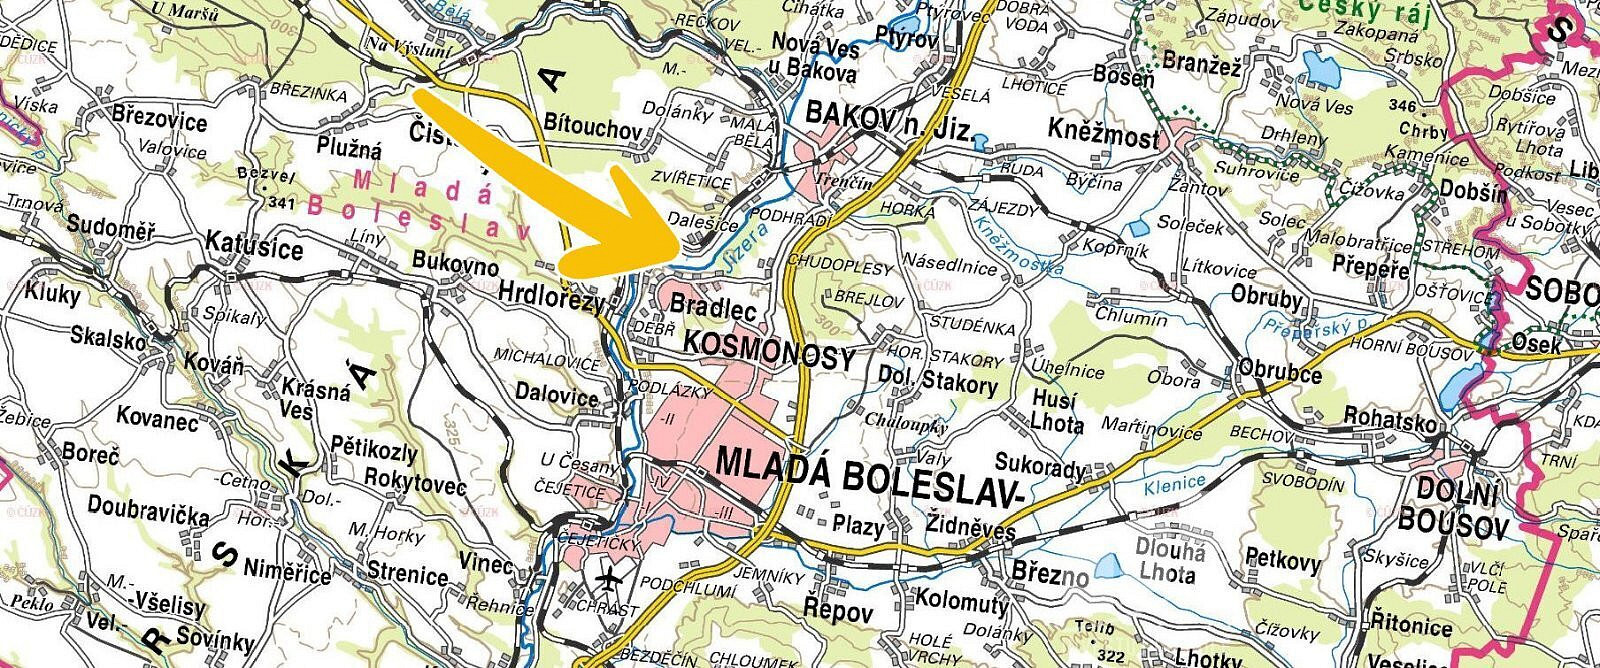 Bítouchov - Dalešice, okres Mladá Boleslav